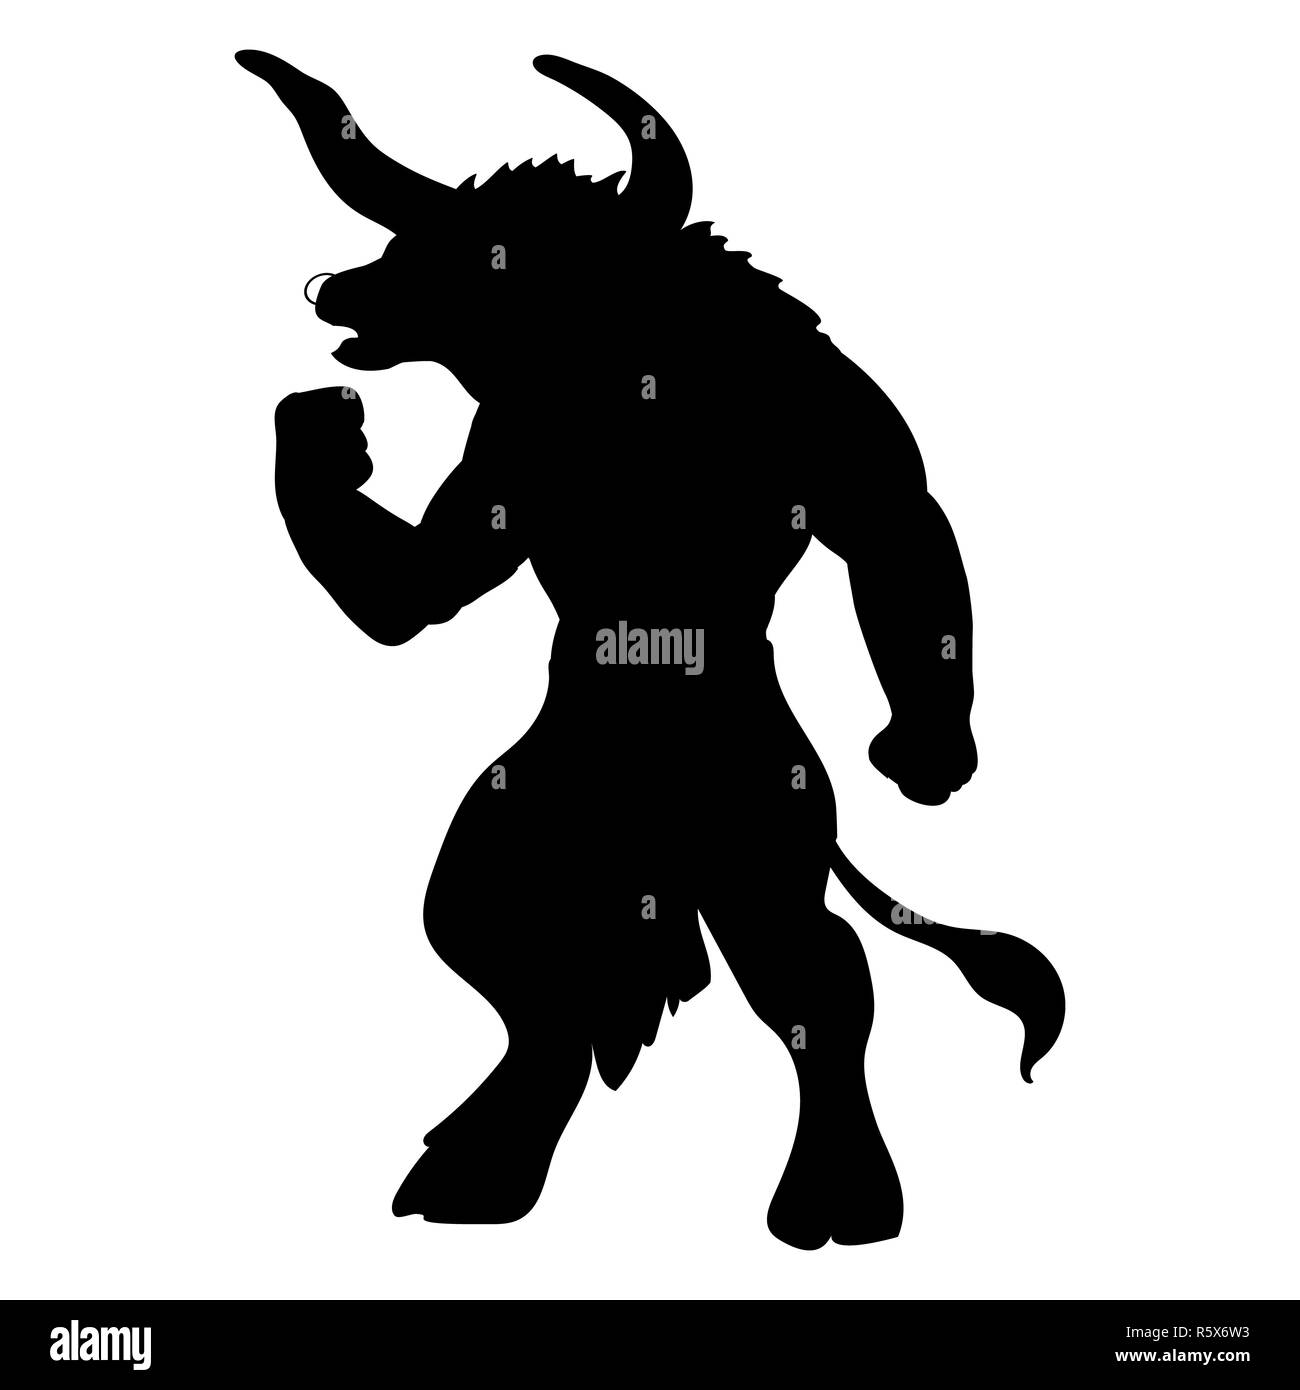 Minotaur silhouette ancient mythology fantasy Stock Photo